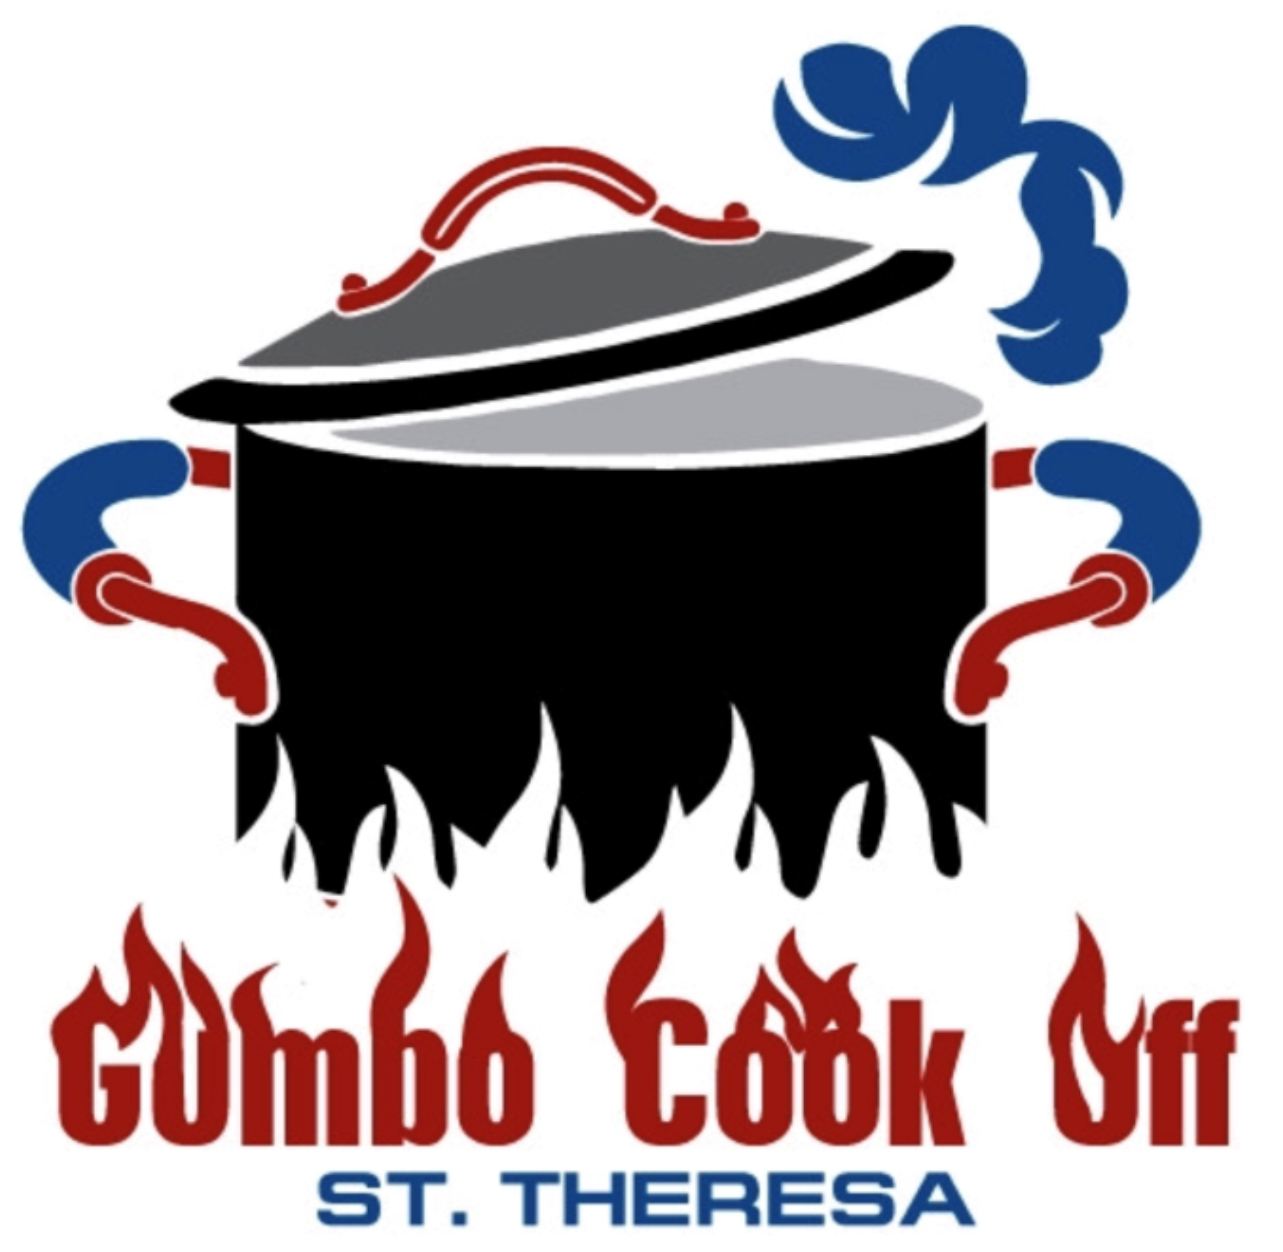 Gumbo Cook Off logo